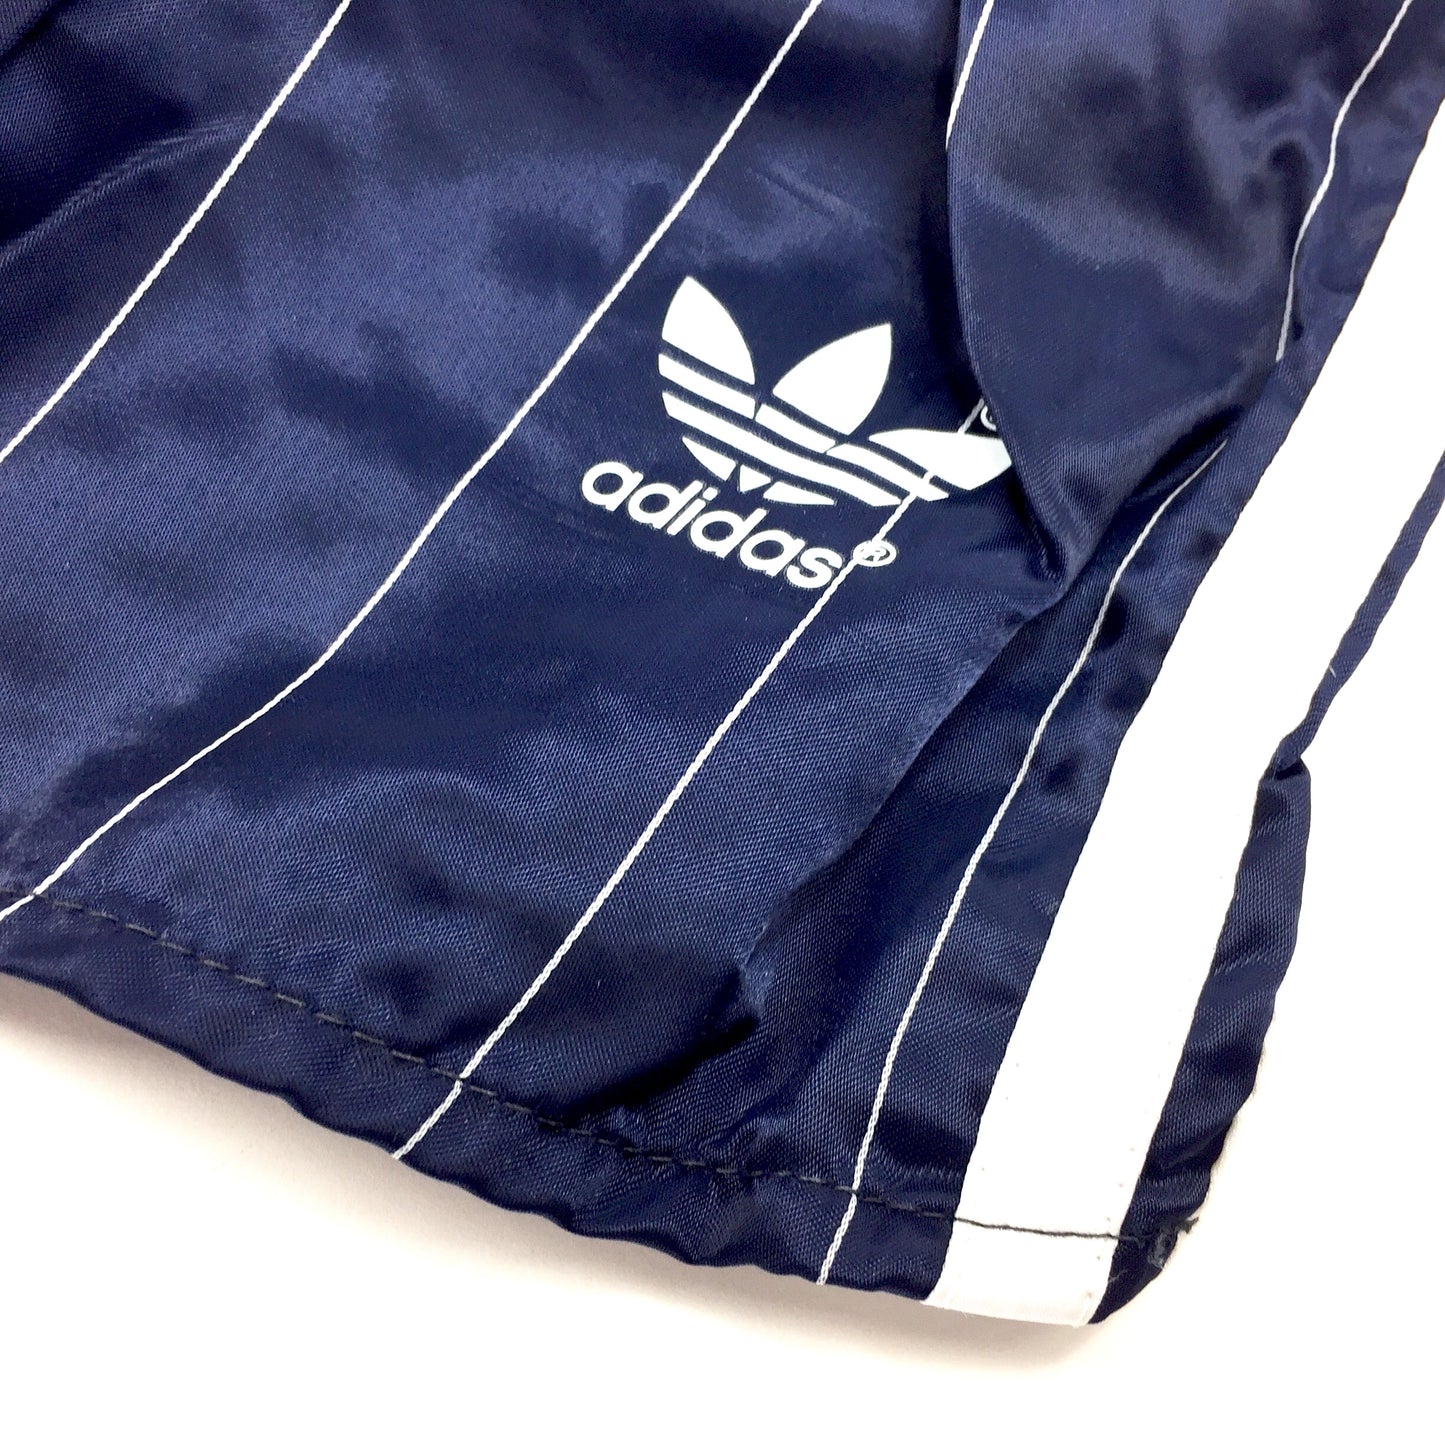 0486 Adidas Vintage 80s Shiny Track Shorts